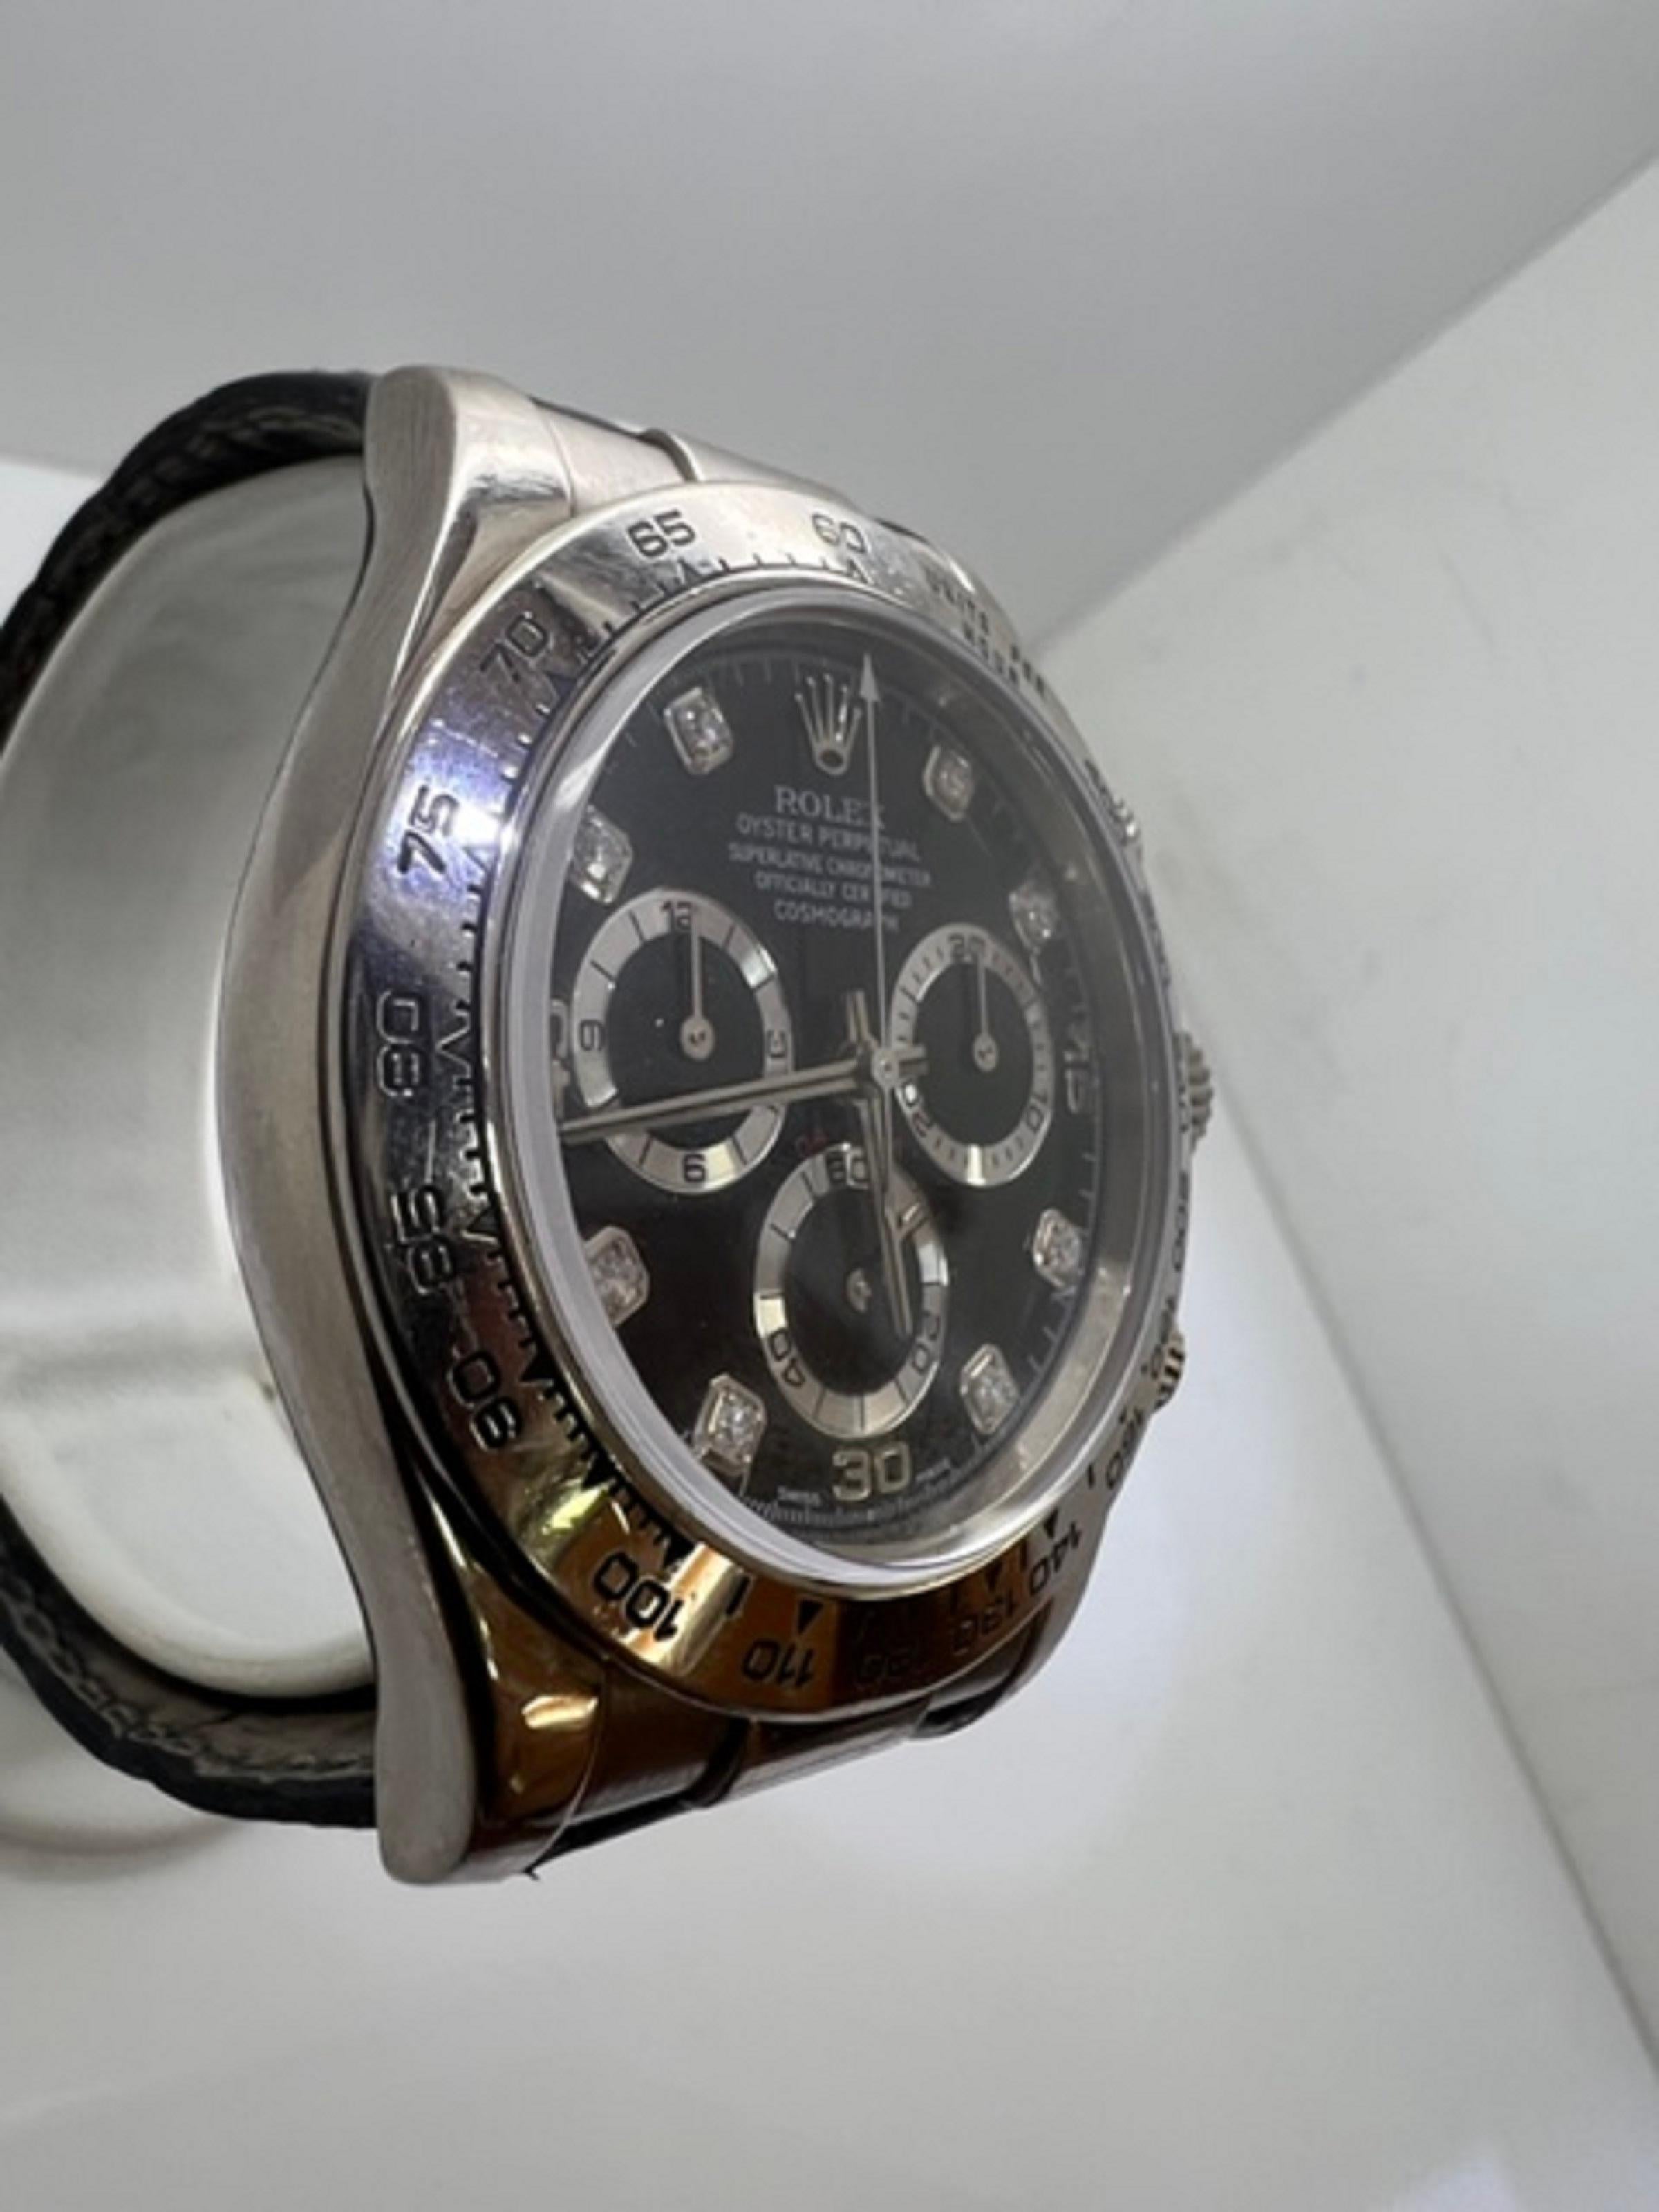 Rolex Daytona Black Diamond Dial Men's Watch

excellent condition

This watch is 100% all original Rolex

Original Rolex Box & Booklets 

Shop With Confidence 

5 Year Warranty

